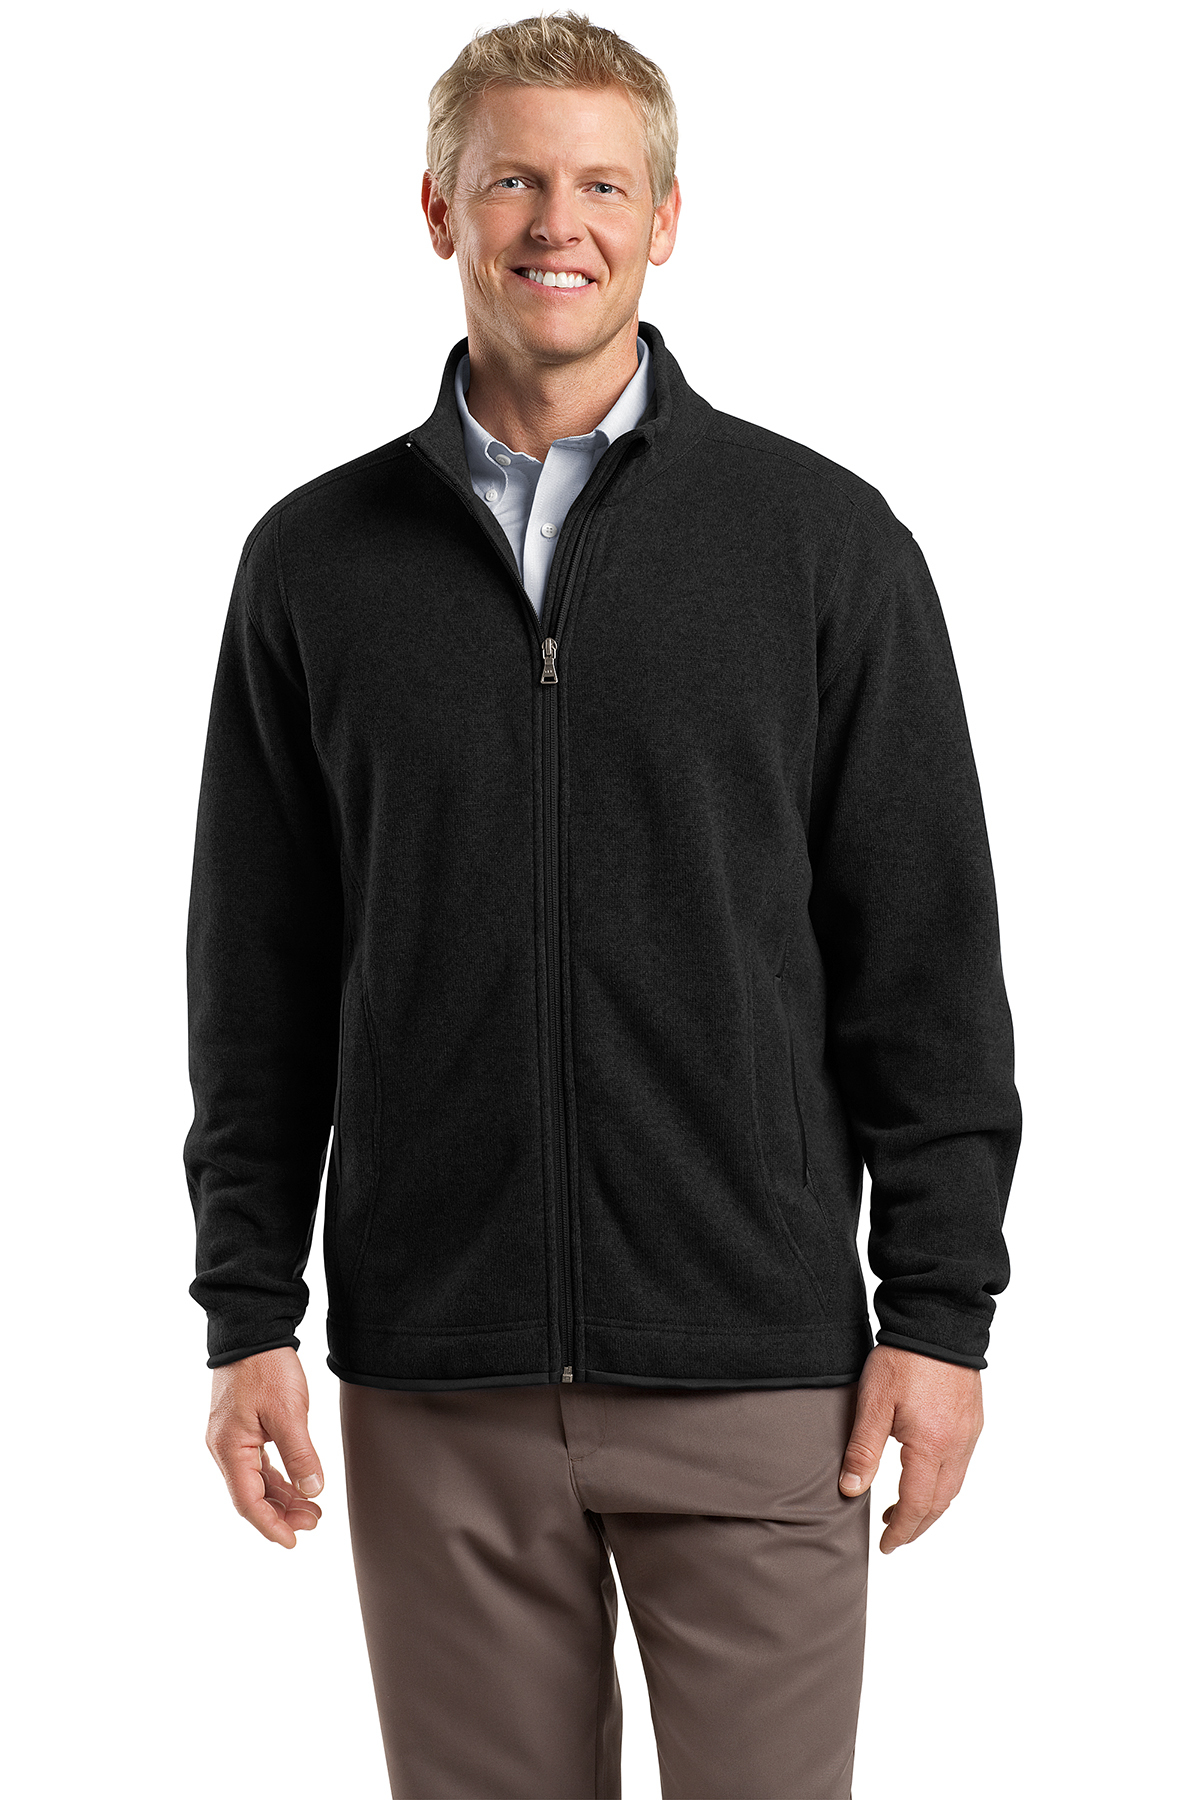 Red House - Sweater Fleece Full-Zip Jacket | Product | SanMar